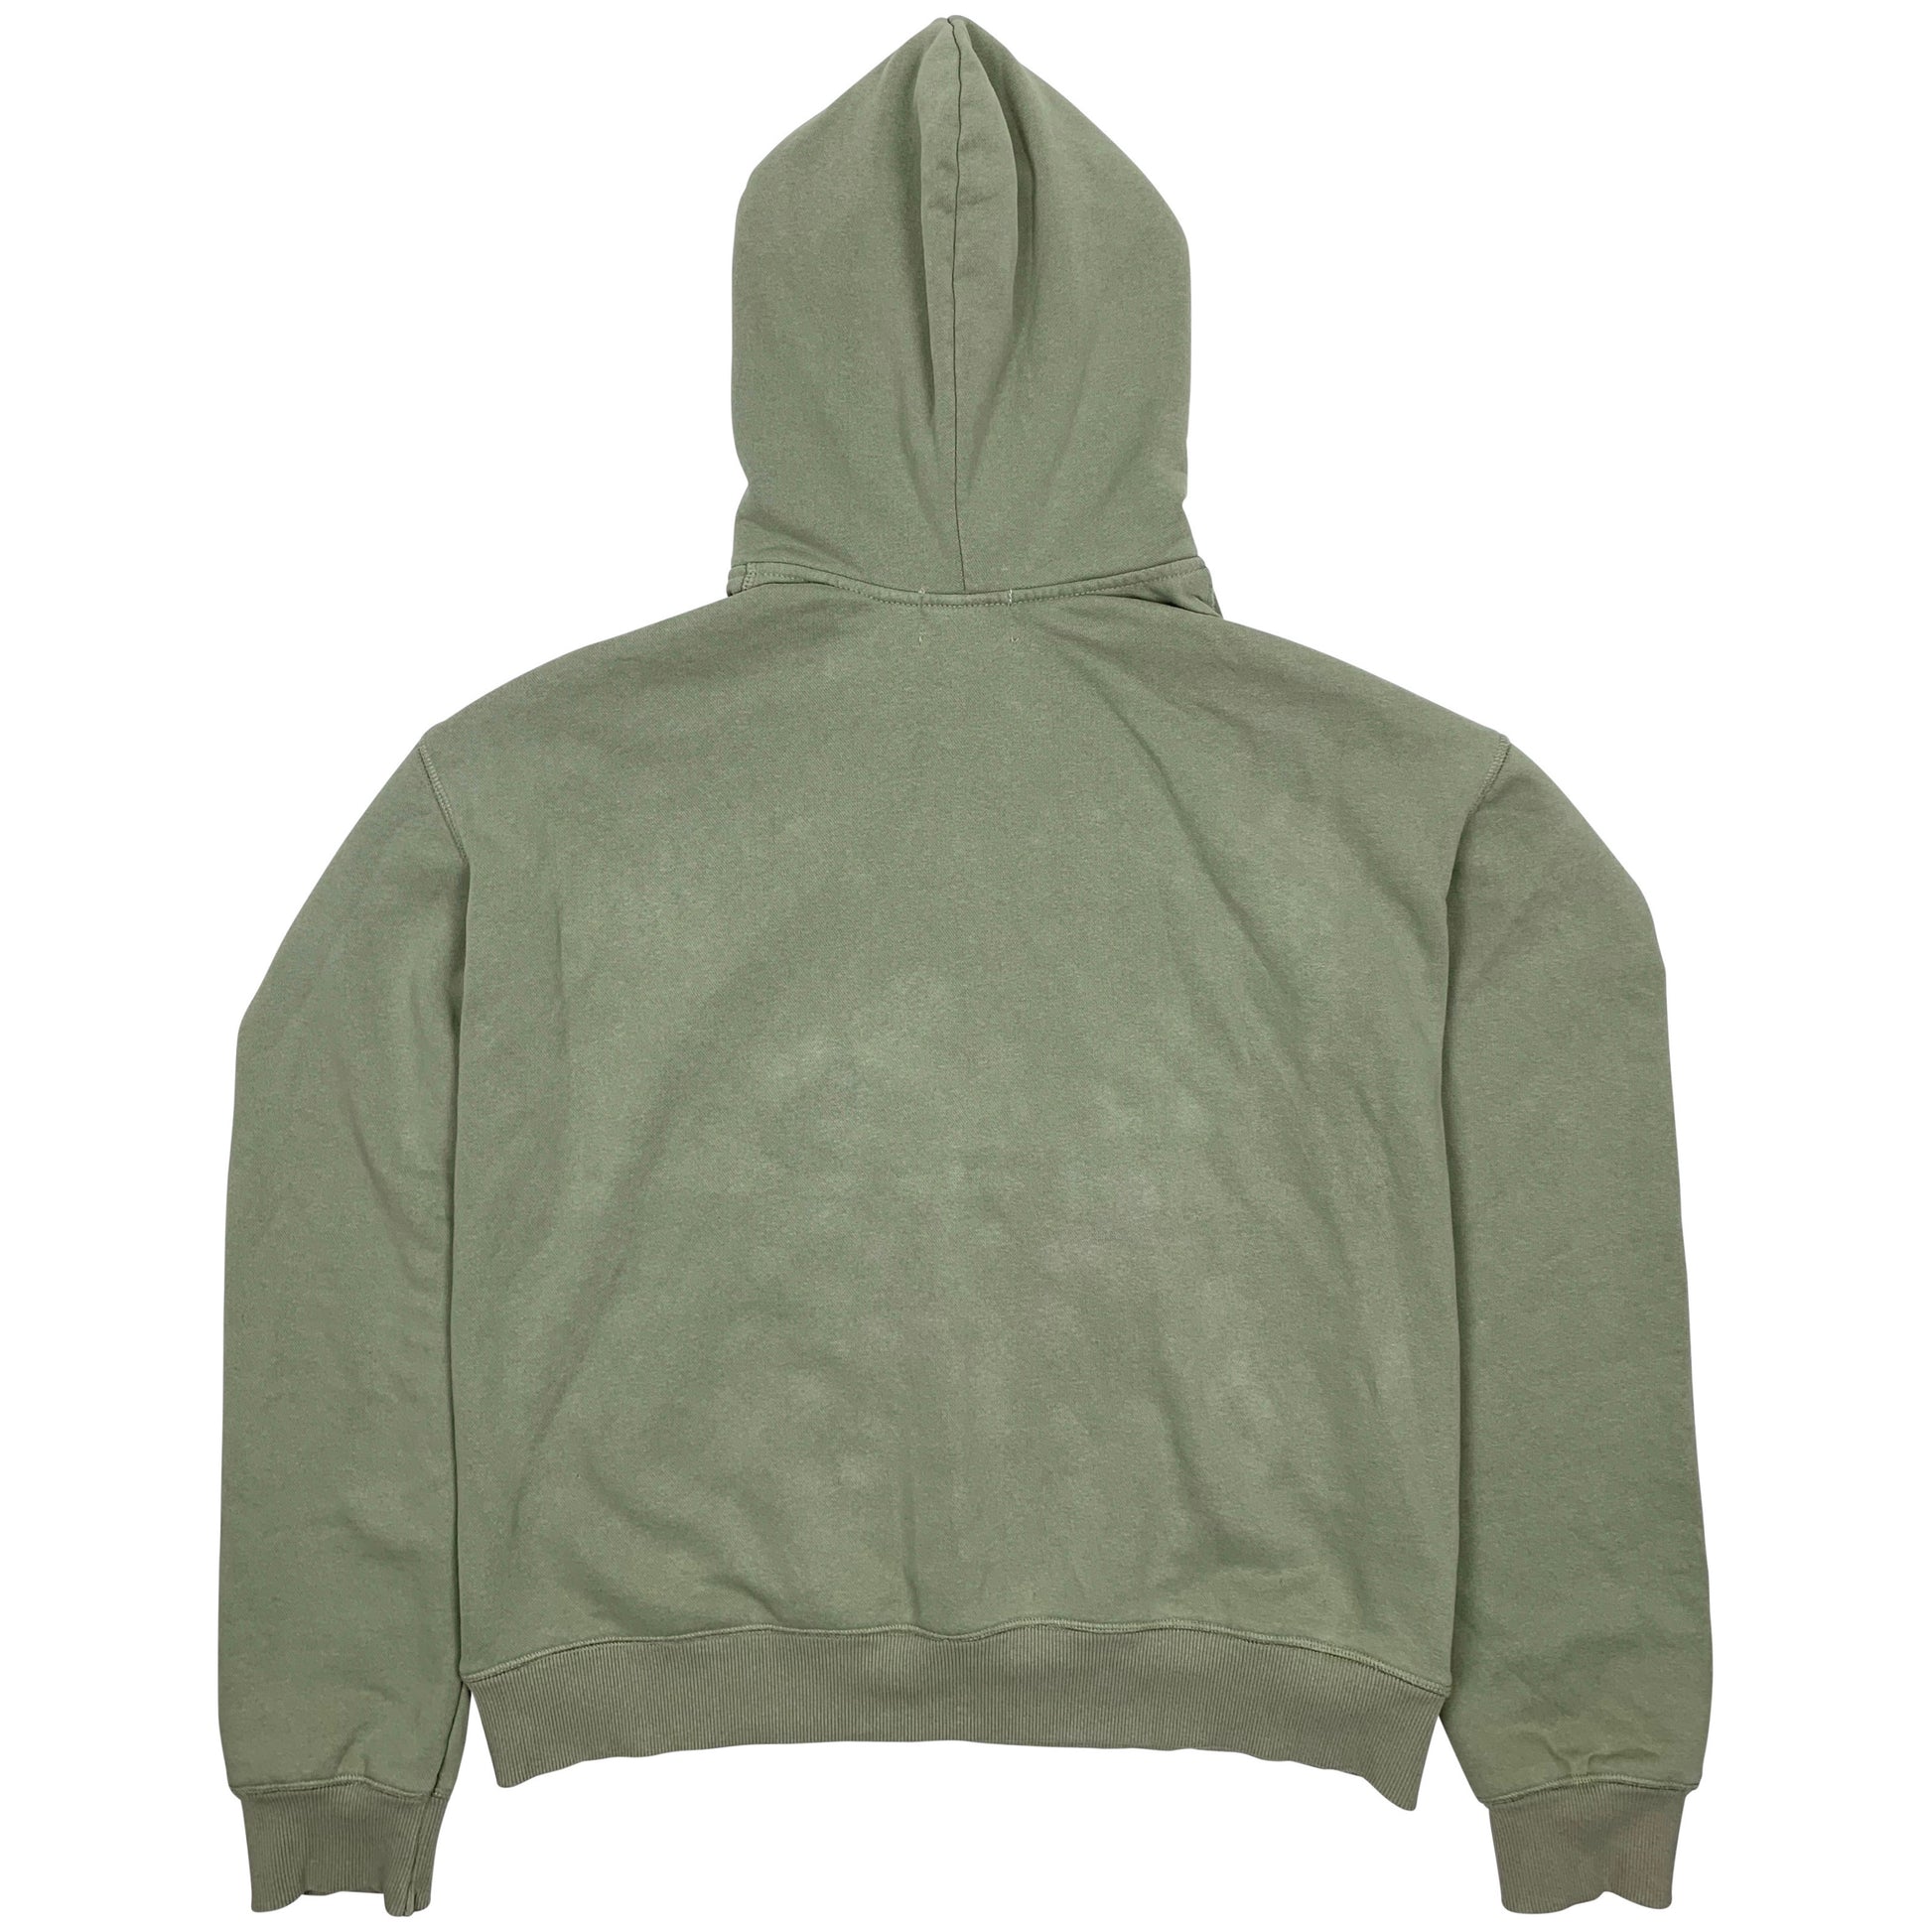 bled hoodie stonewash olive green los angeles Bledwear hype streetwear